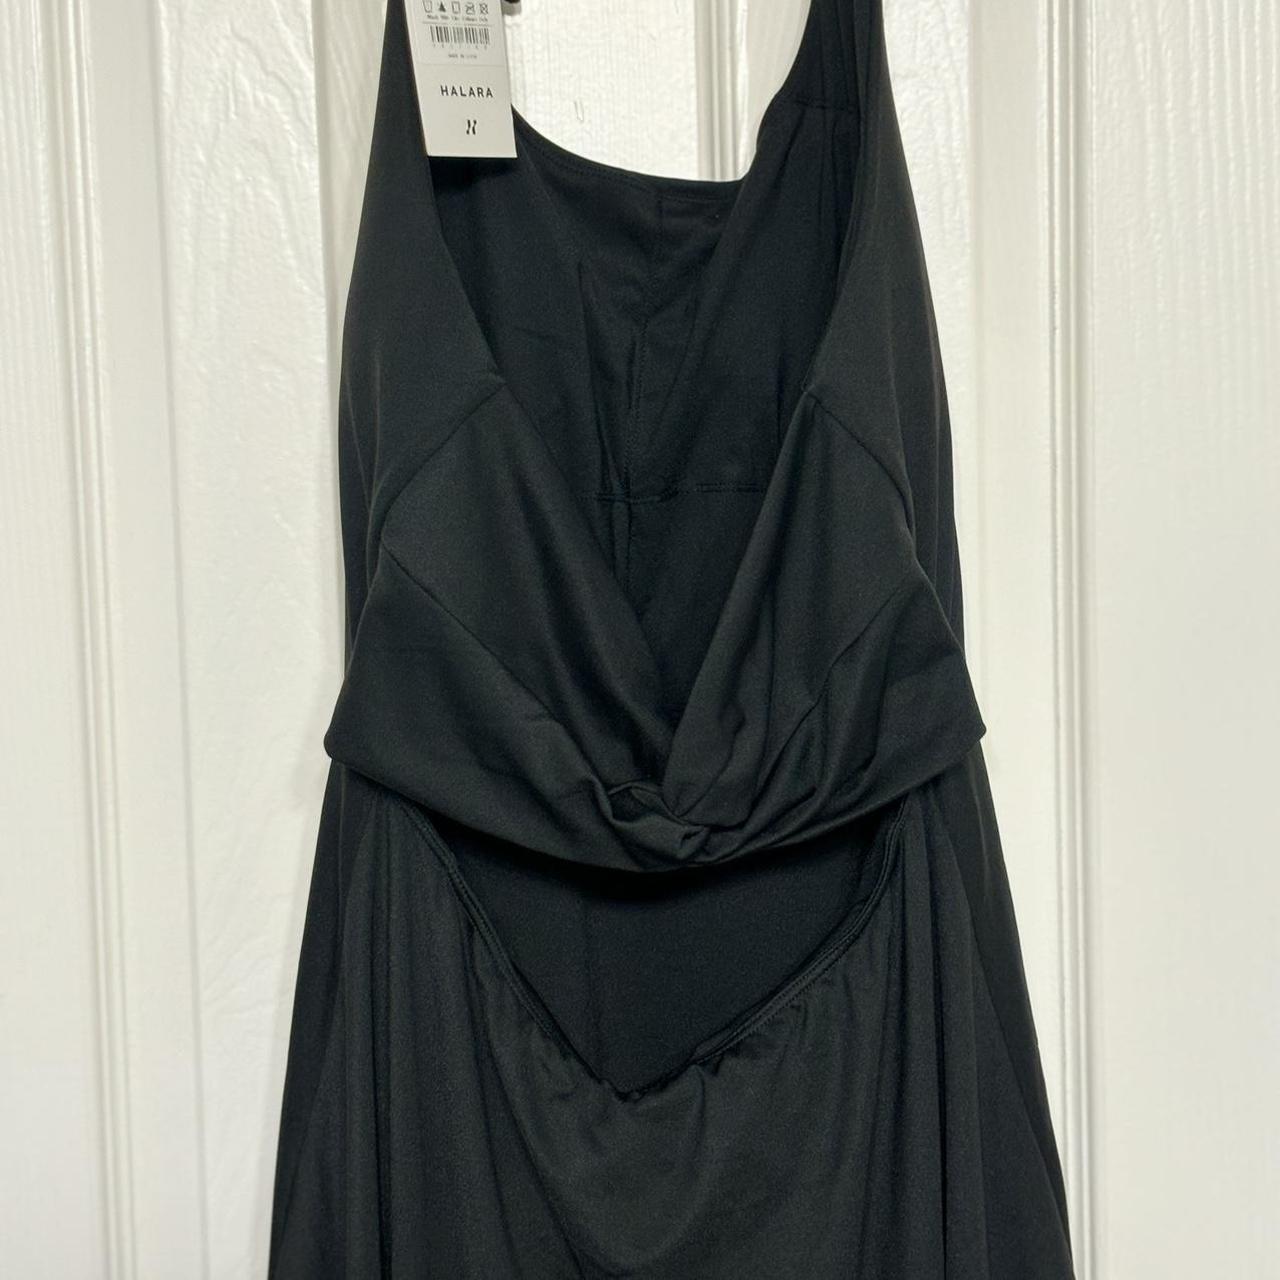 Rare London black halter-neck lace plunge dress, - Depop